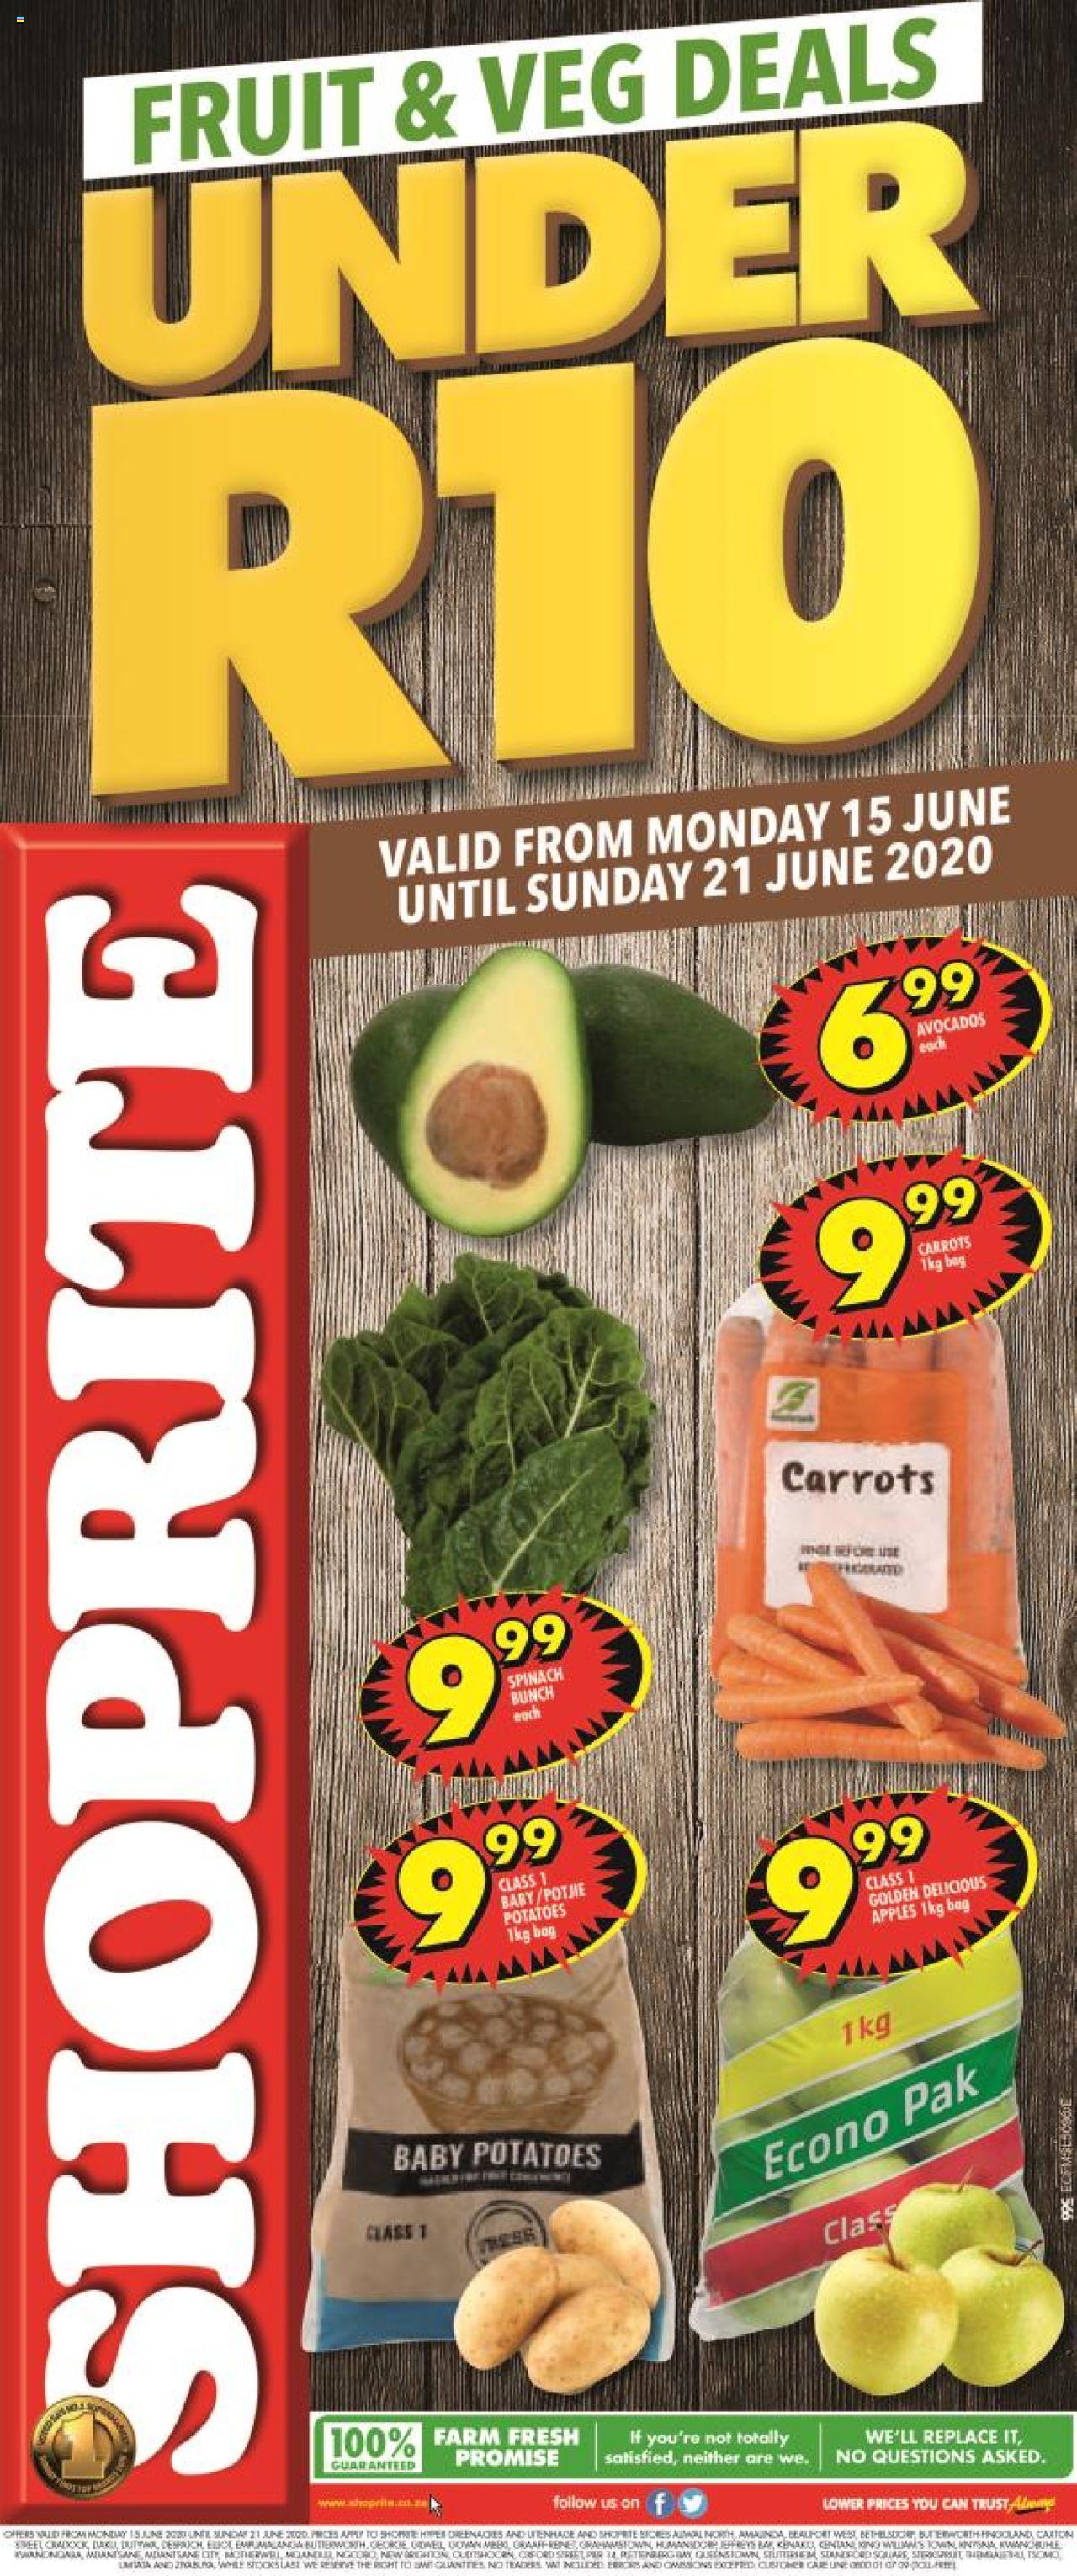 Shoprite Specials Fruit and Veg Deals 15 June 2020